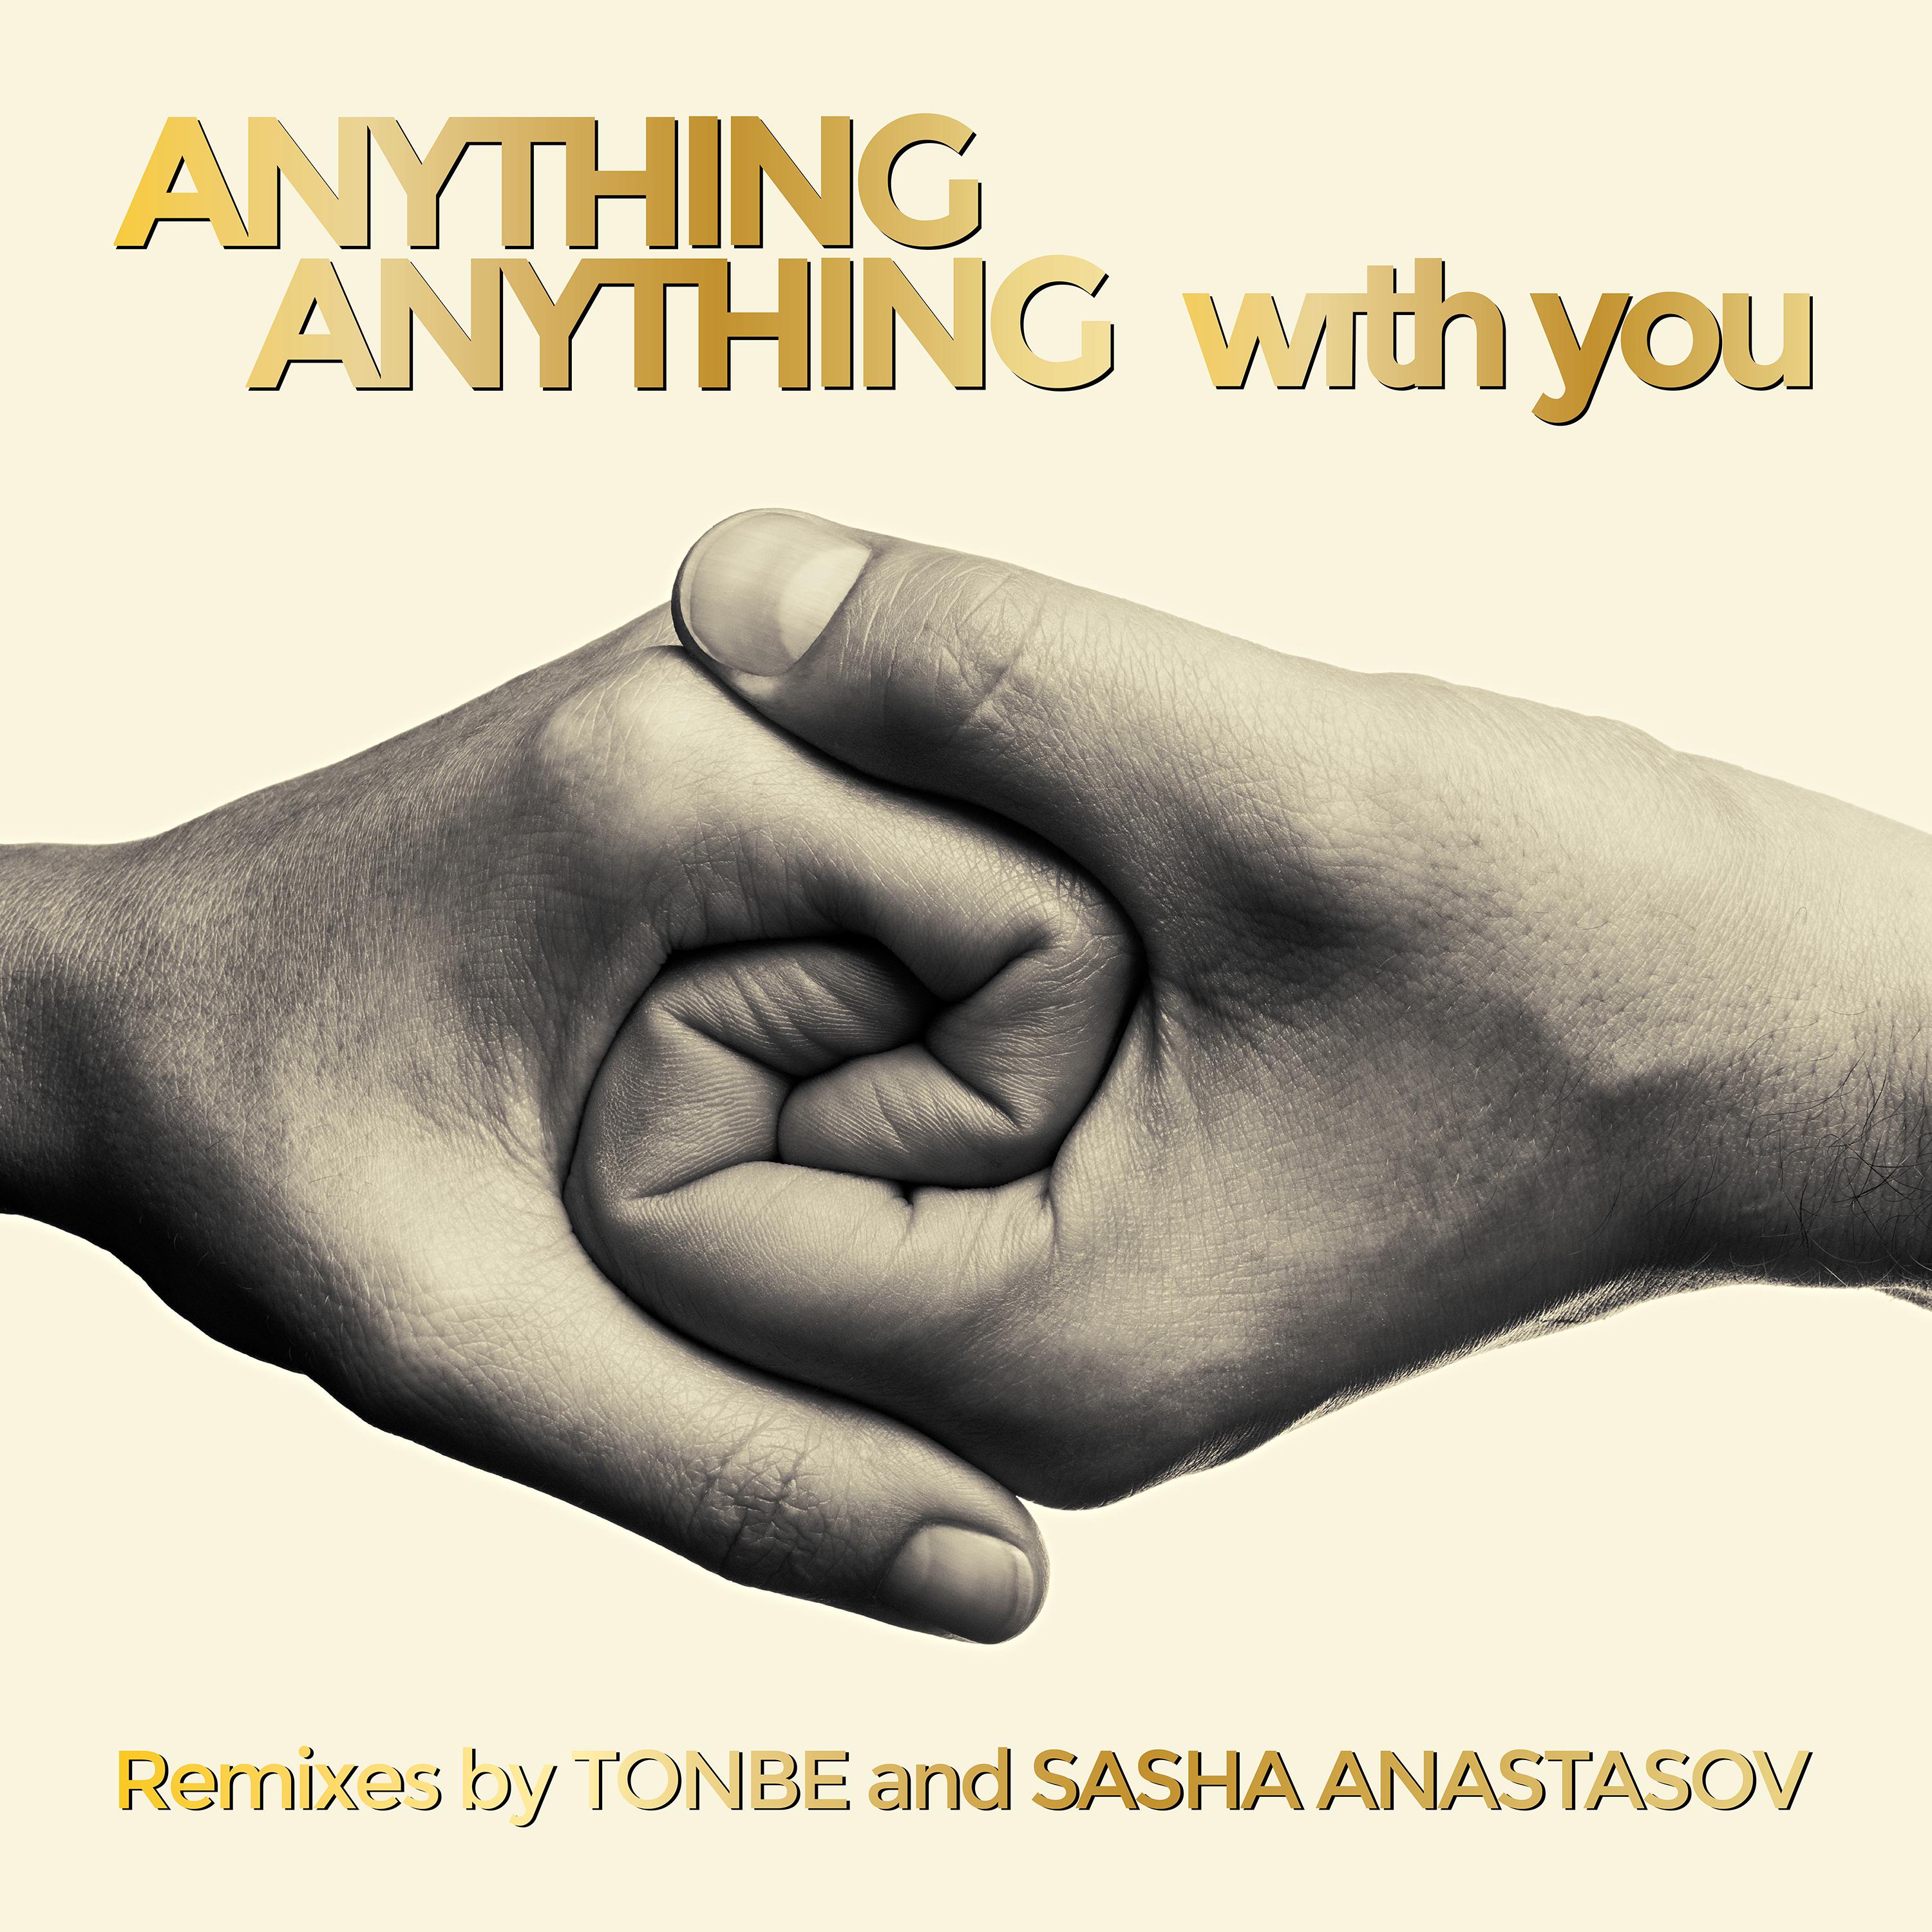 With You (Sasha Anastasov Remix)